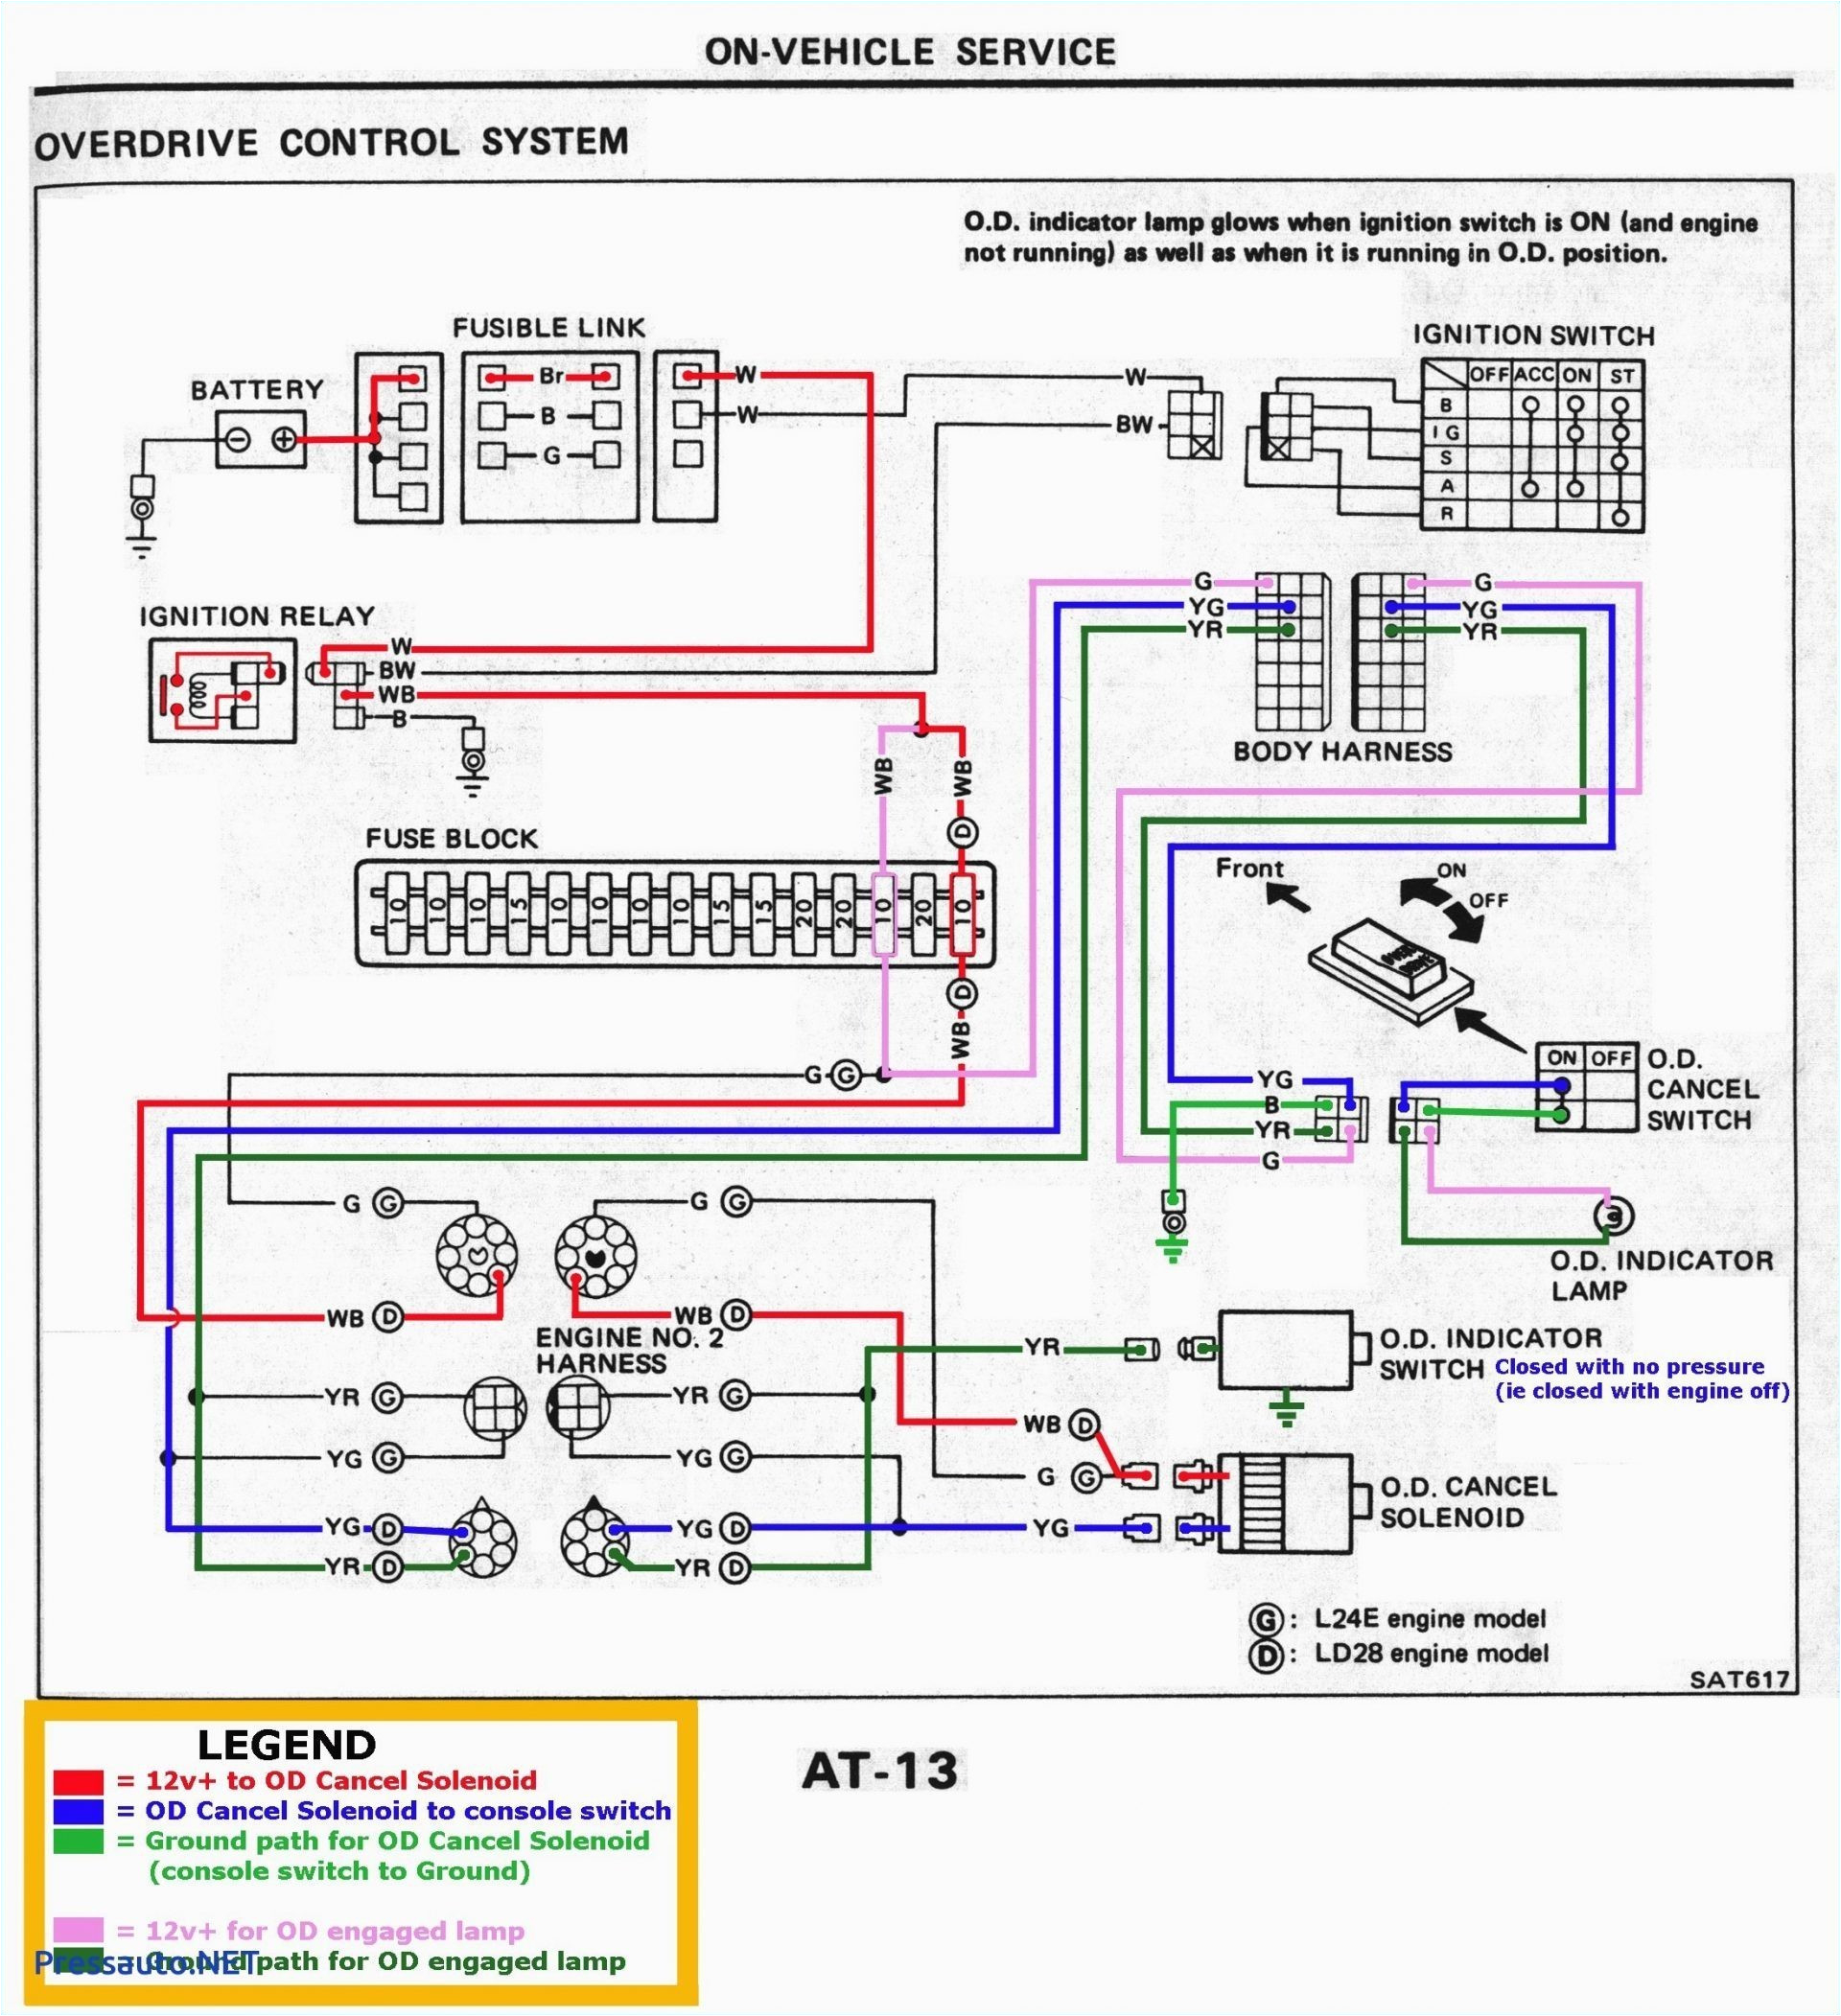 Trailer Plug Wiring Diagram 5 Way south Africa Wiring Diagram Furthermore 5 Wire Trailer Light Converter Wiring